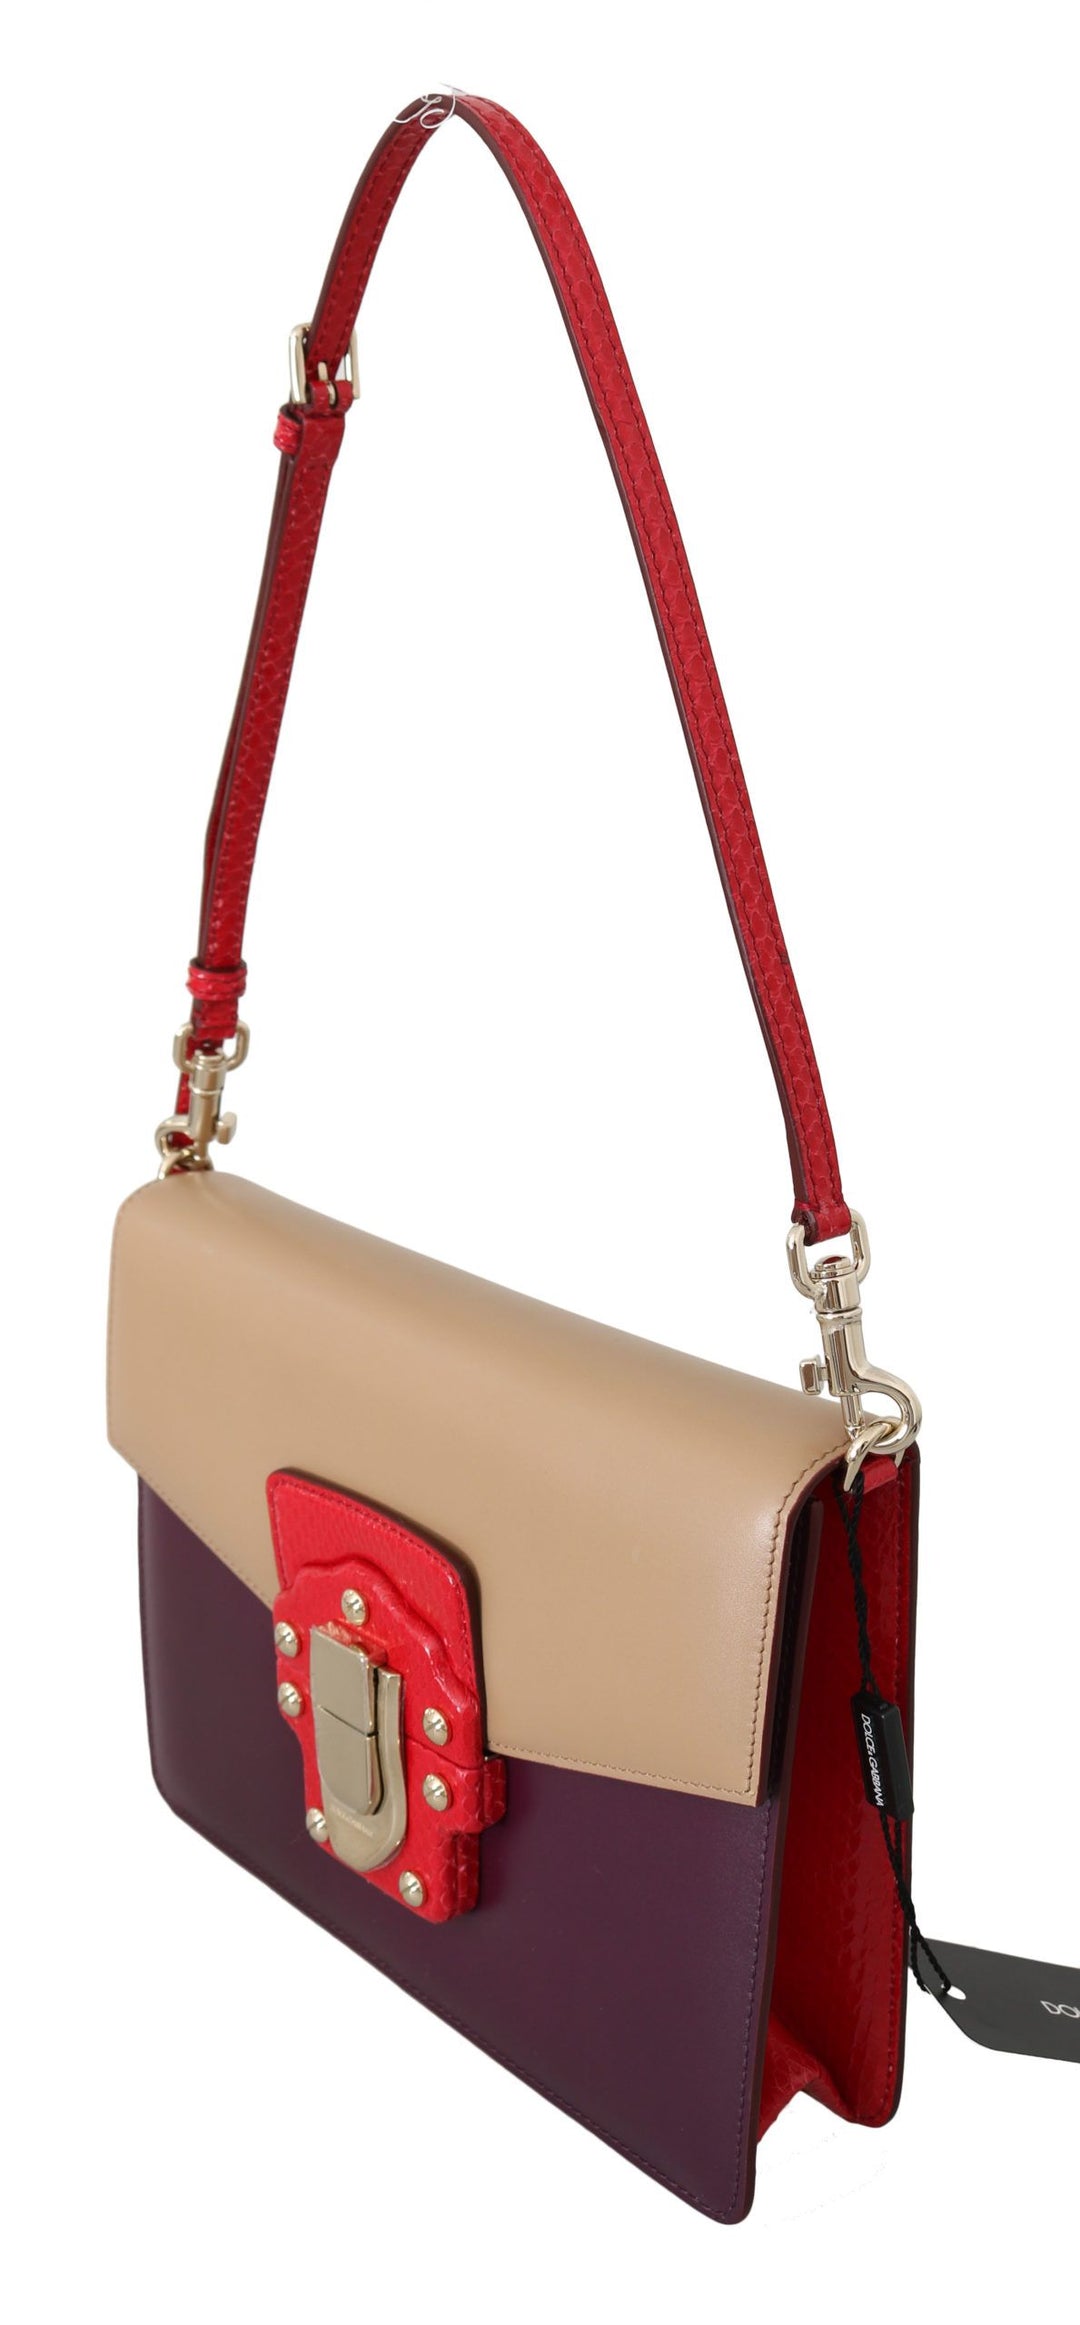 Dolce & Gabbana Exquisite LUCIA Leather Shoulder Bag